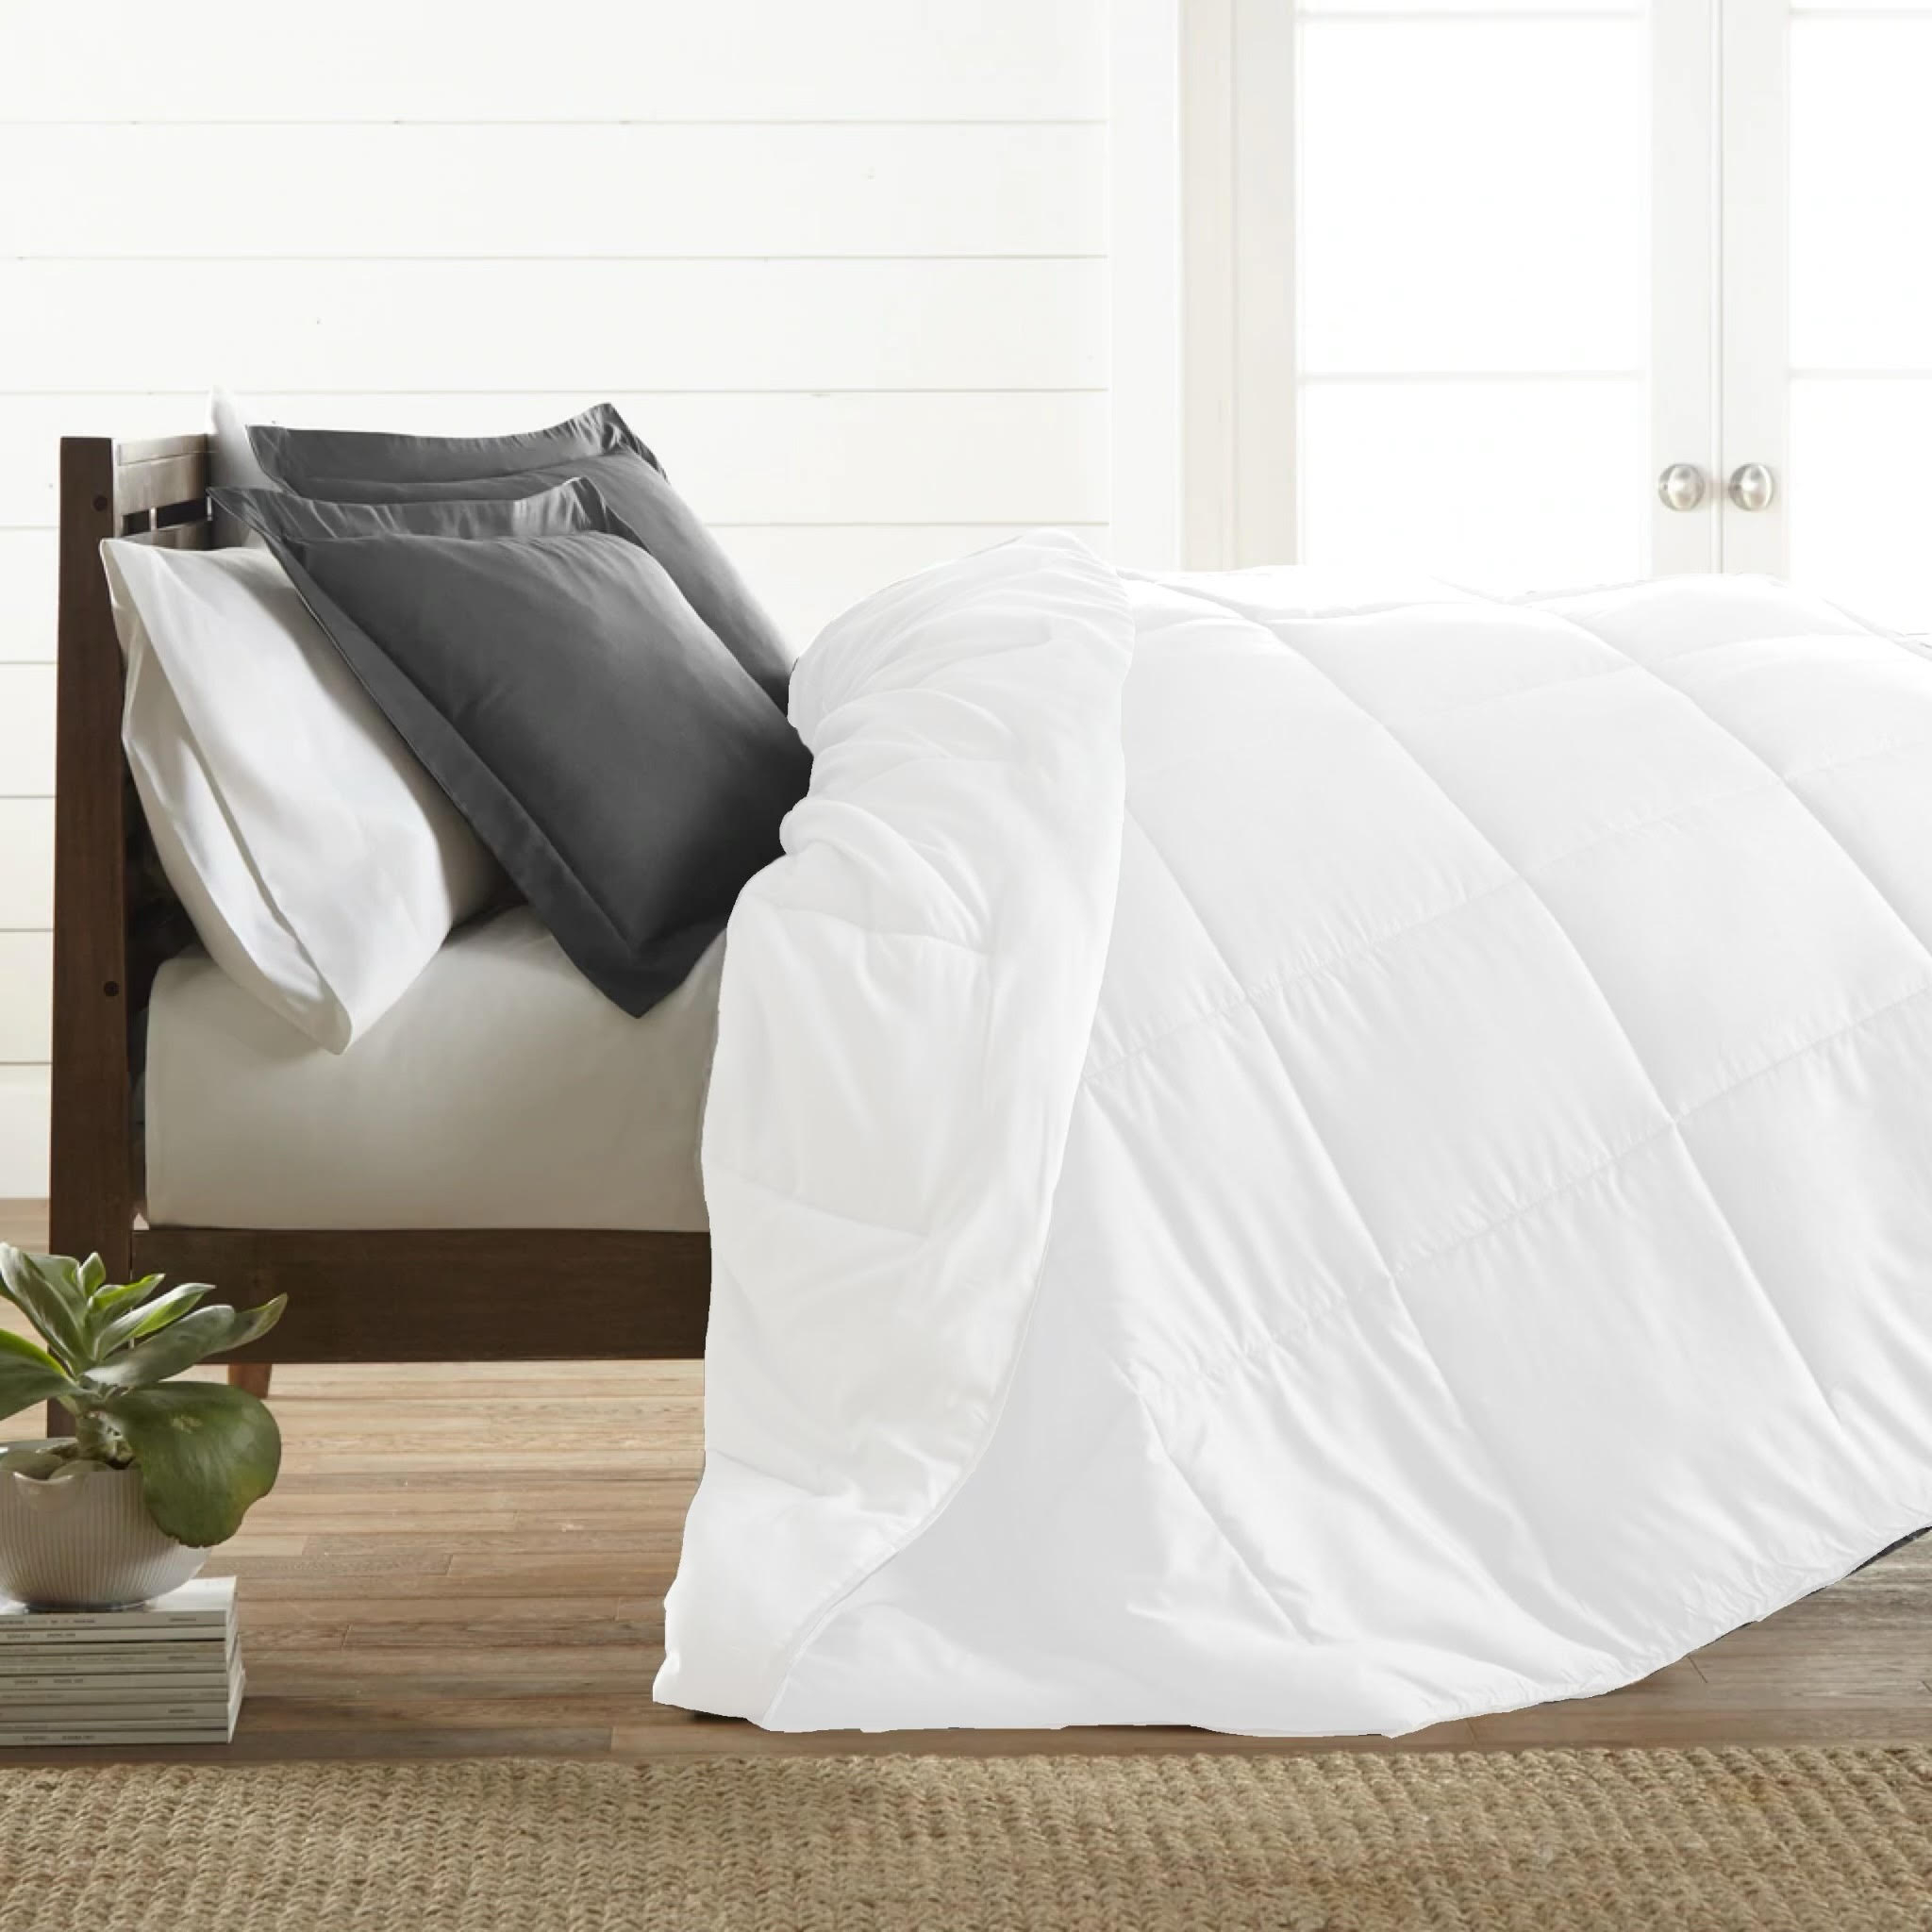 Bamboo Elegance Reversible Comforter - Premium Down Alternative Filling, Blended Cover, Soft, Quilted, Duvet Insert, Season, Warm and Fluffy - White,